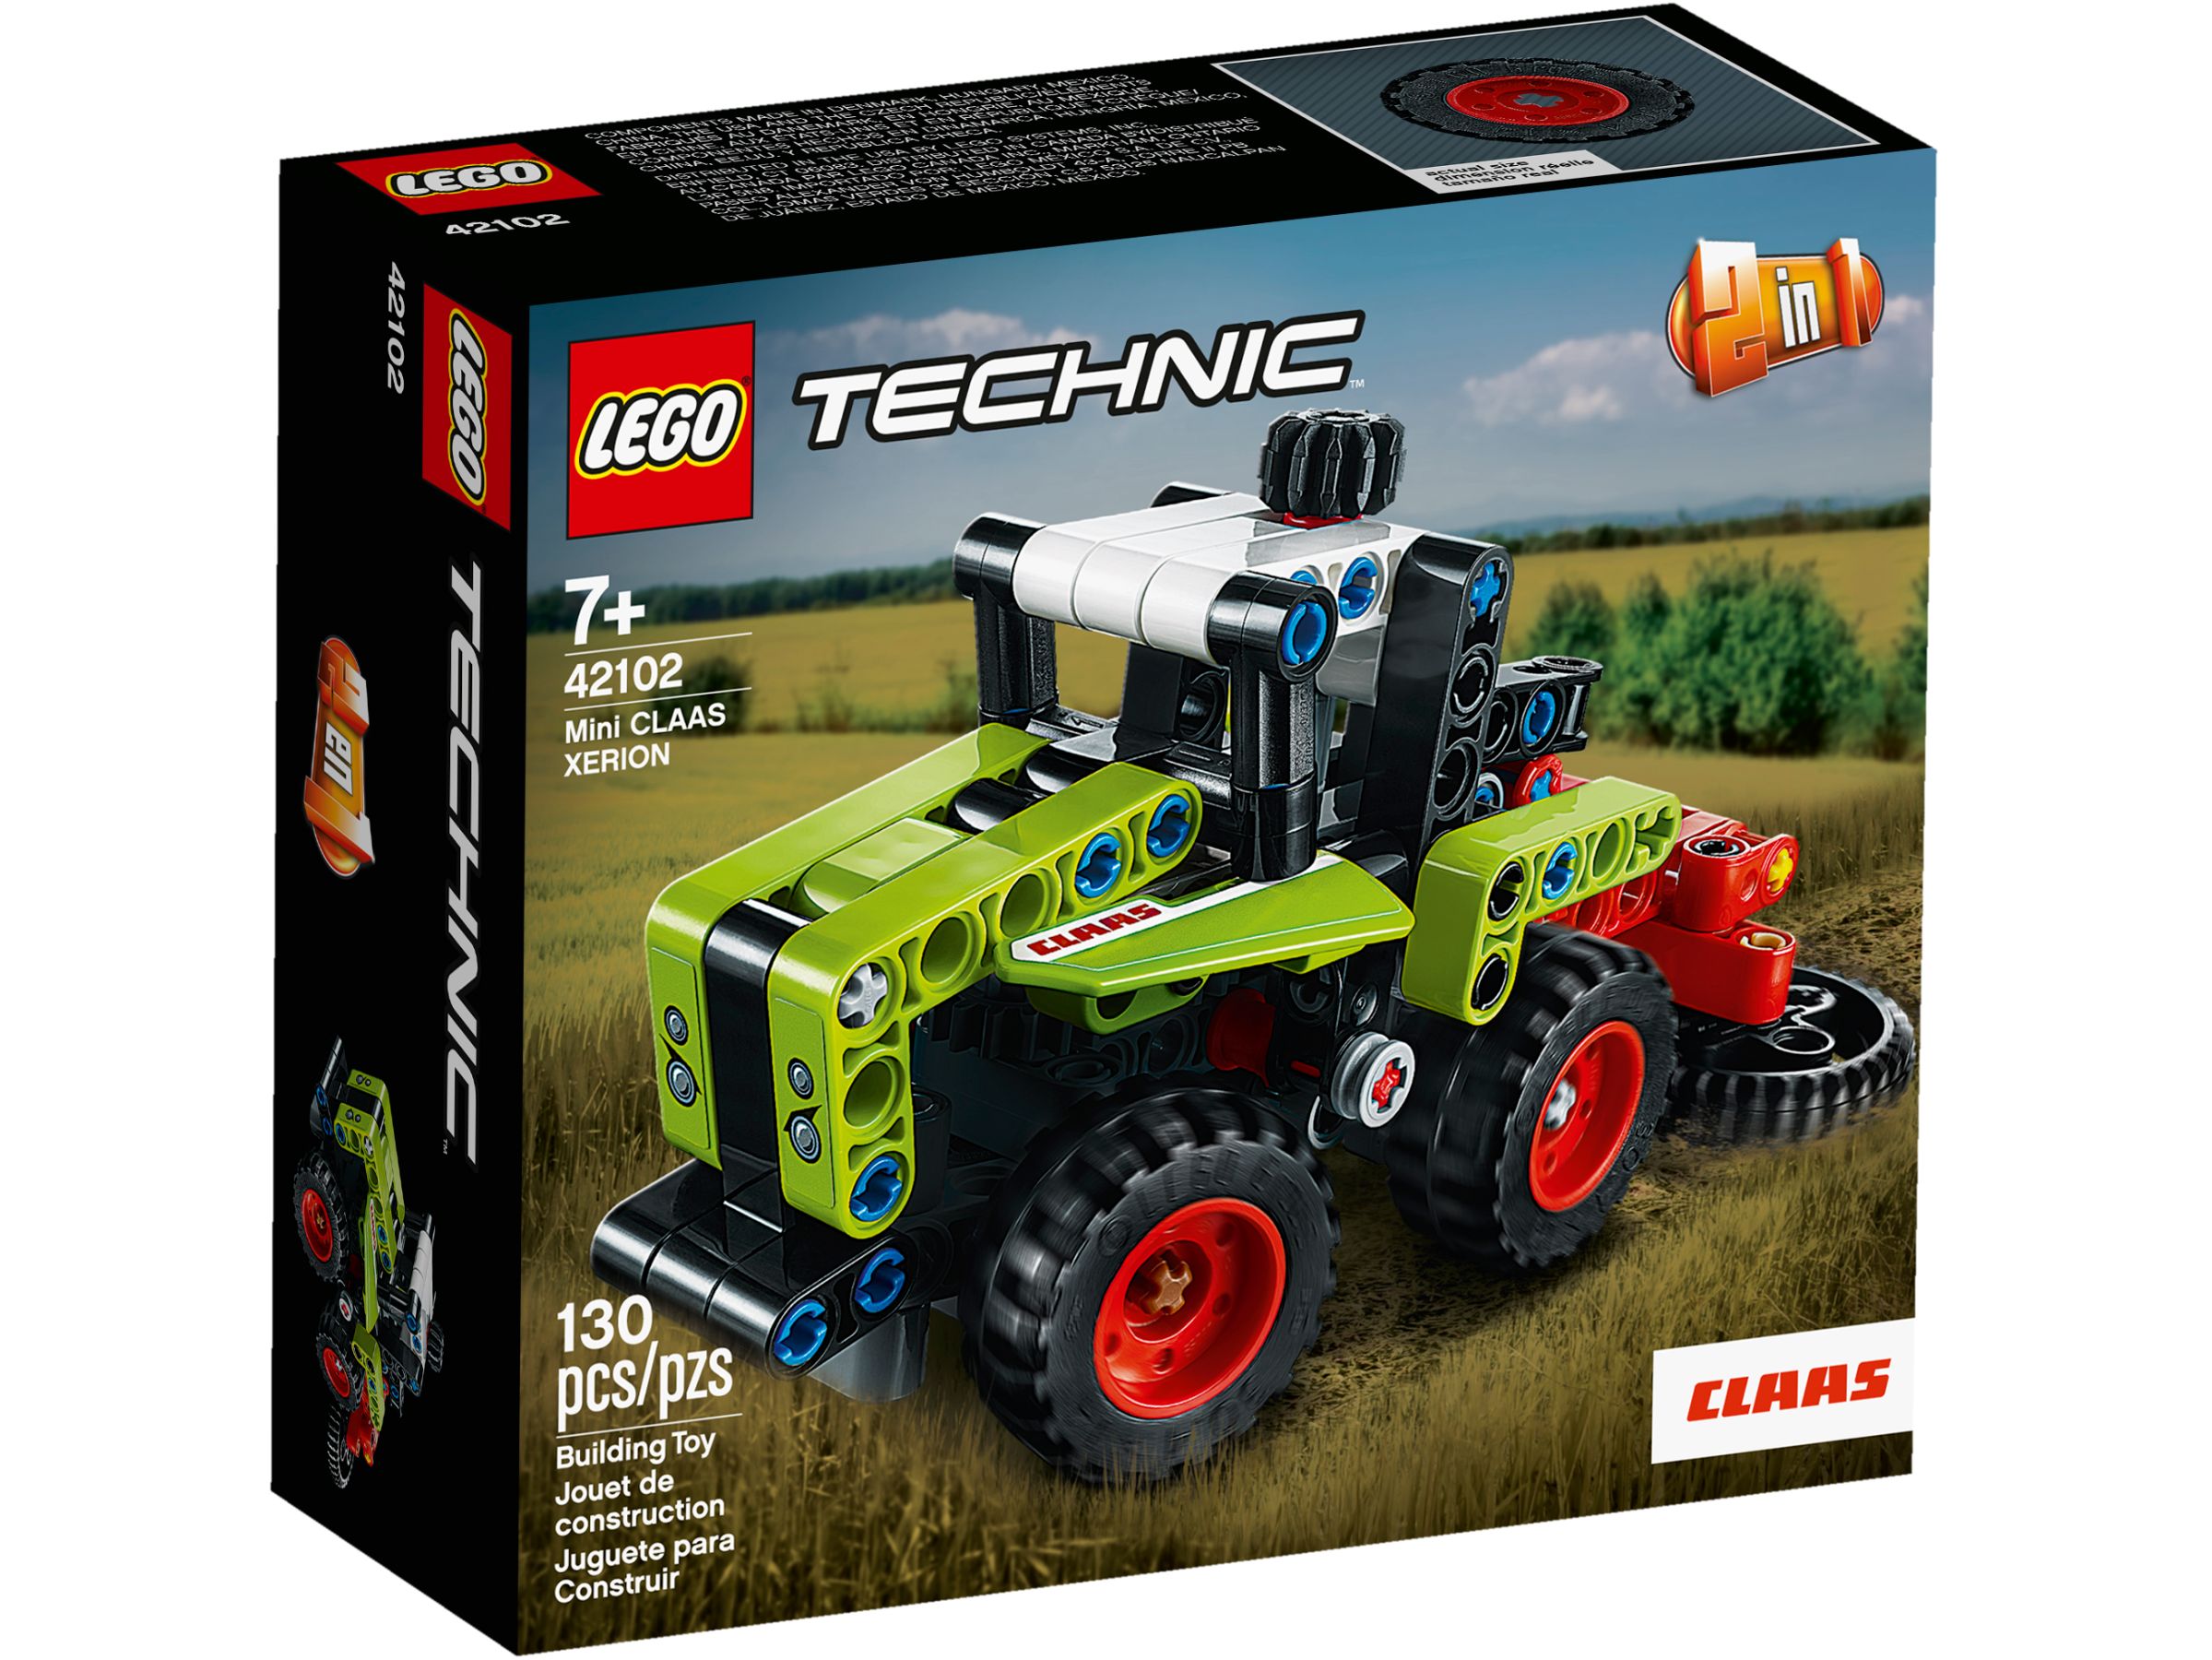 LEGO Technic 42102 Mini CLAAS XERION LEGO_42102_alt1.jpg